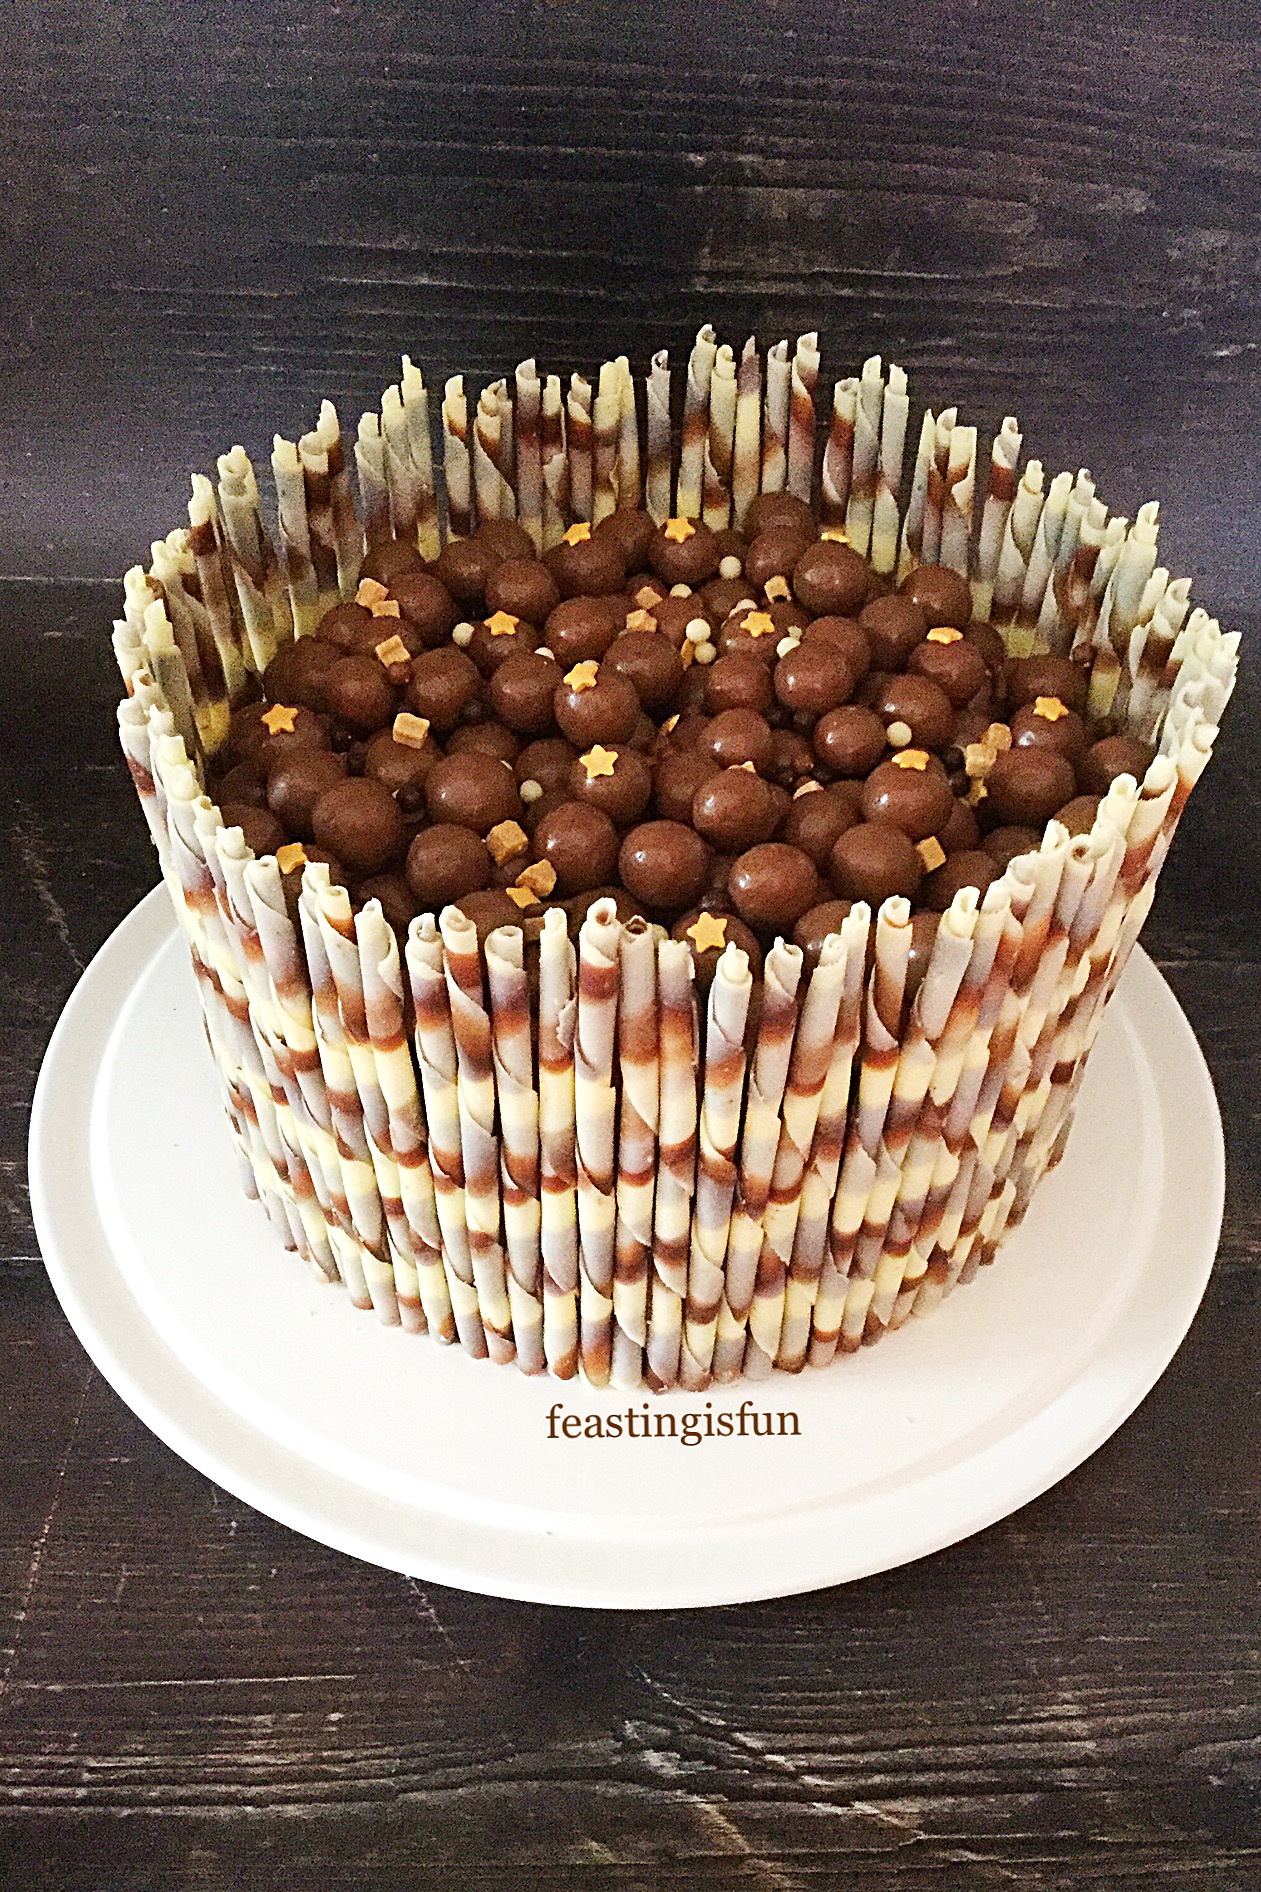 Your wonderful cake creations: Birthday cakes for kids - Picniq Blog